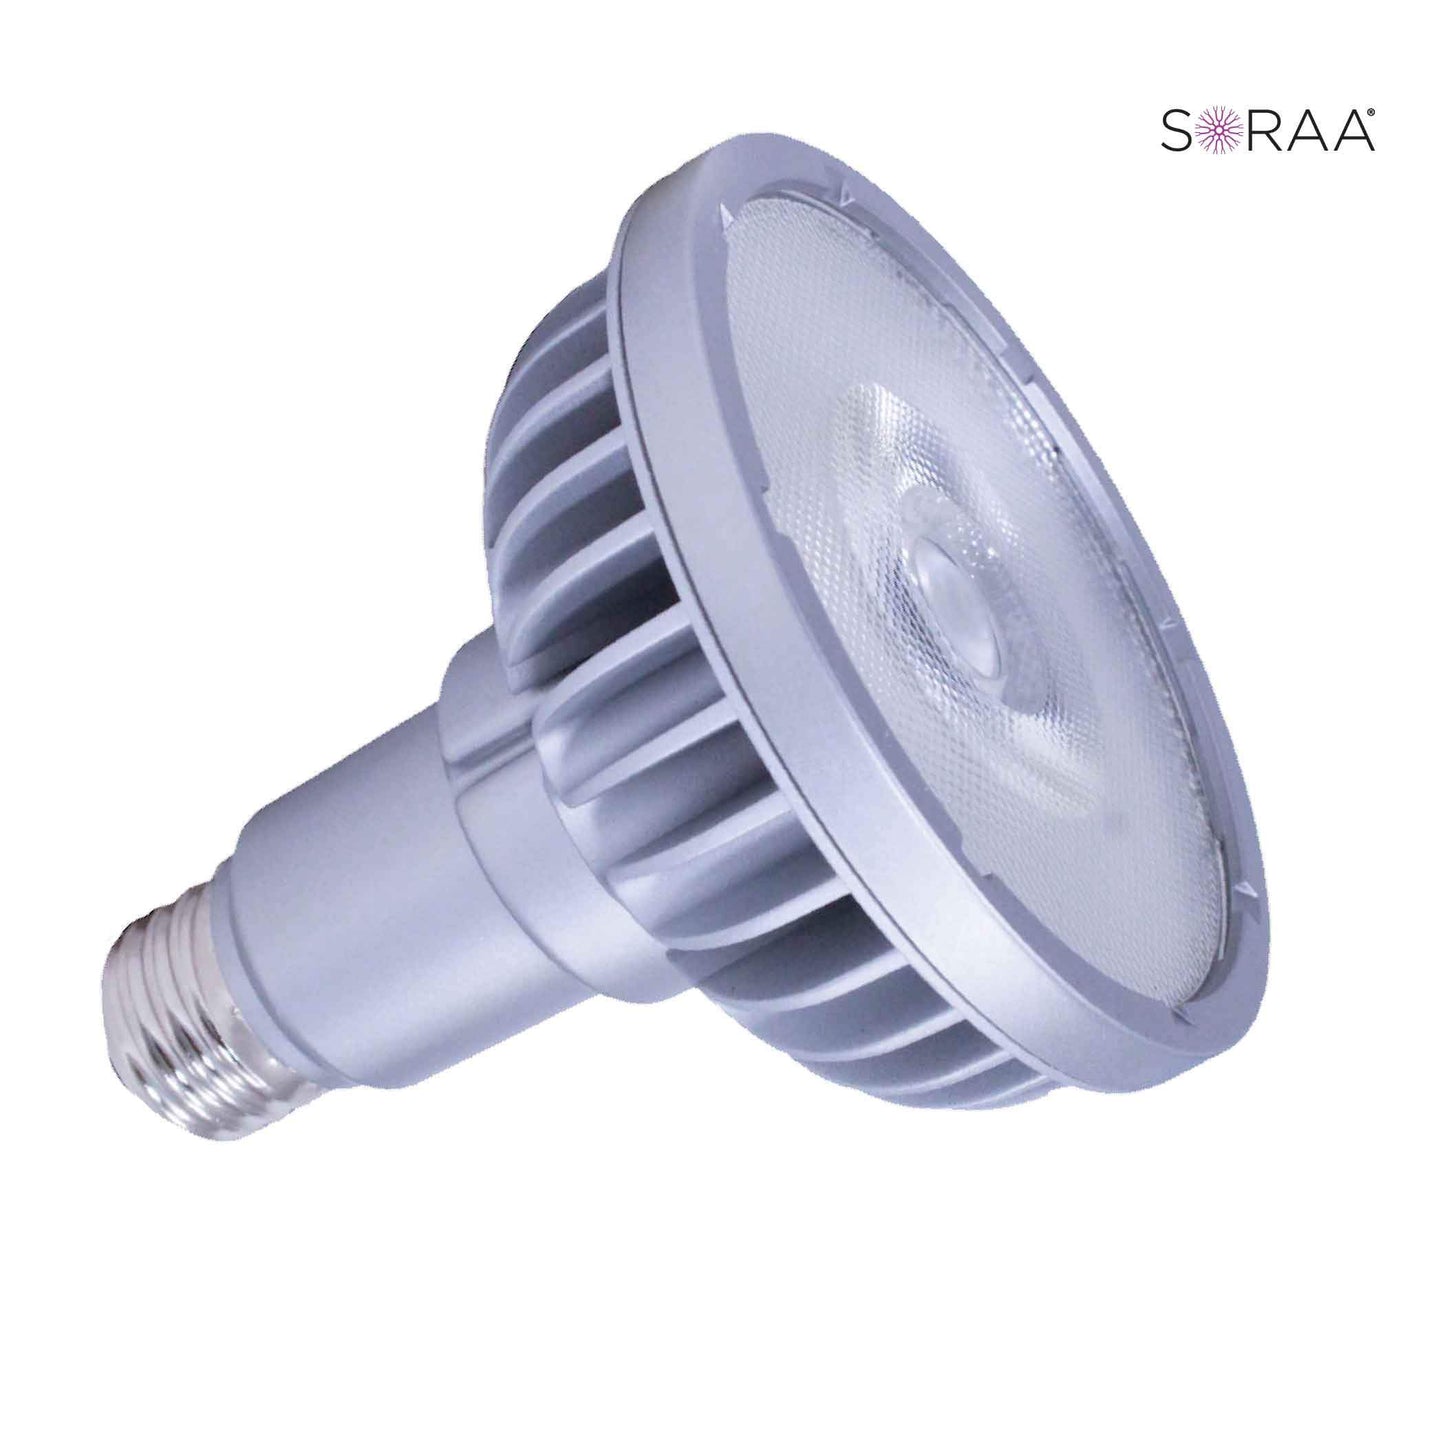 SORAA LED PAR30LN MEDIUM SCREW (E26) 18.5W DIMMABLE LIGHT BULB 3000K/SOFT WHITE 120W HALOGEN EQUIVALENT 1PK (777745)